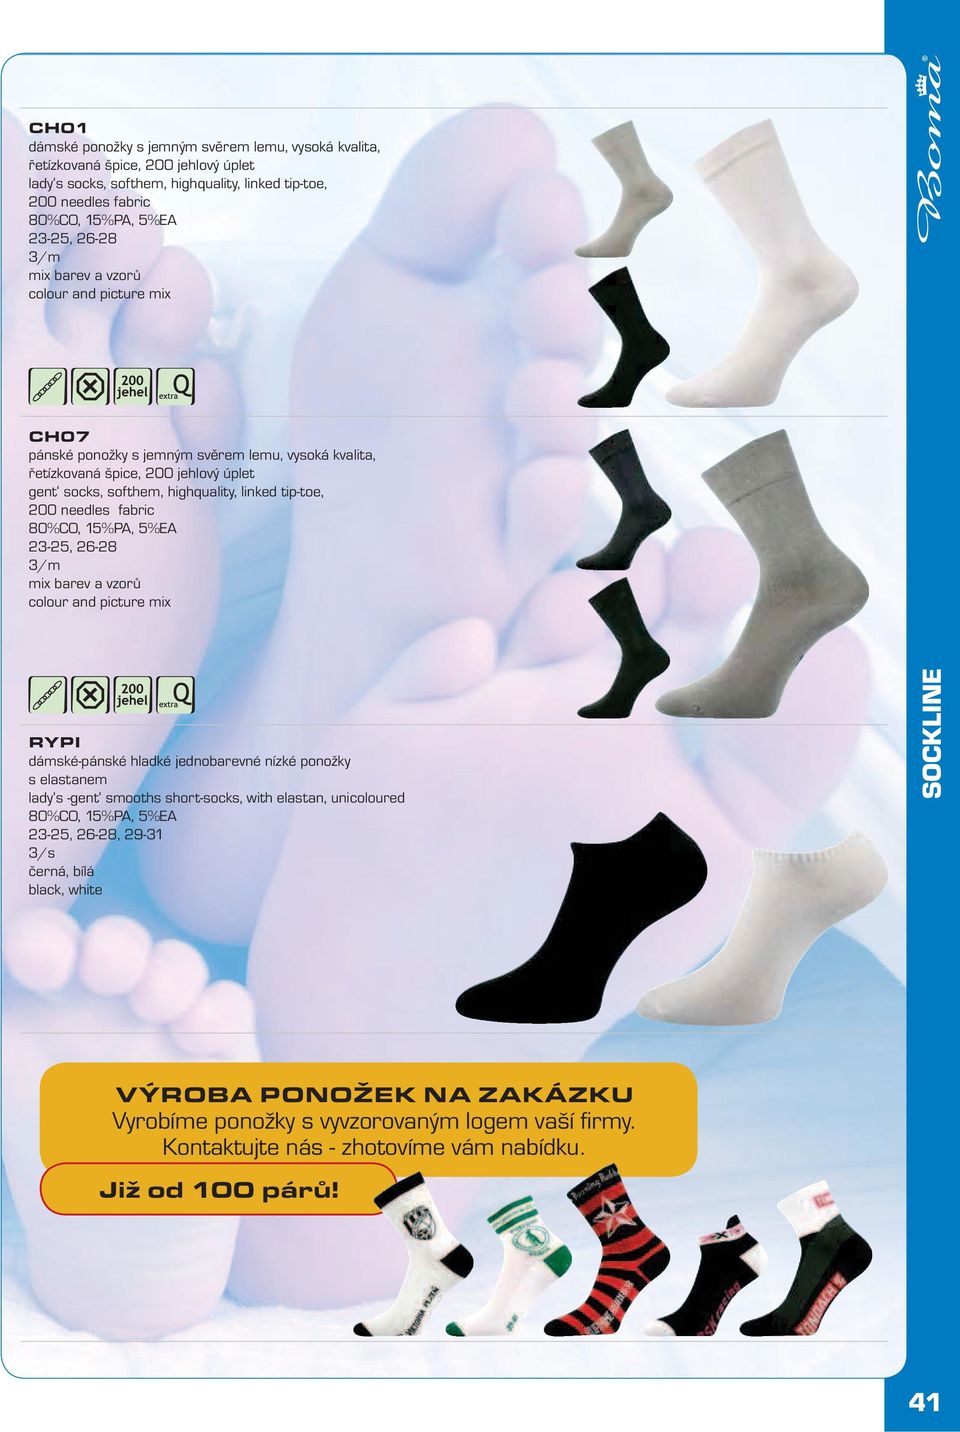 needles fabric 23-25, 26-28 RYPI dámské-pánské hladké jednobarevné nízké ponožky s elastanem lady s -gent smooths short-socks, with elastan, coloured 23-25, 26-28,